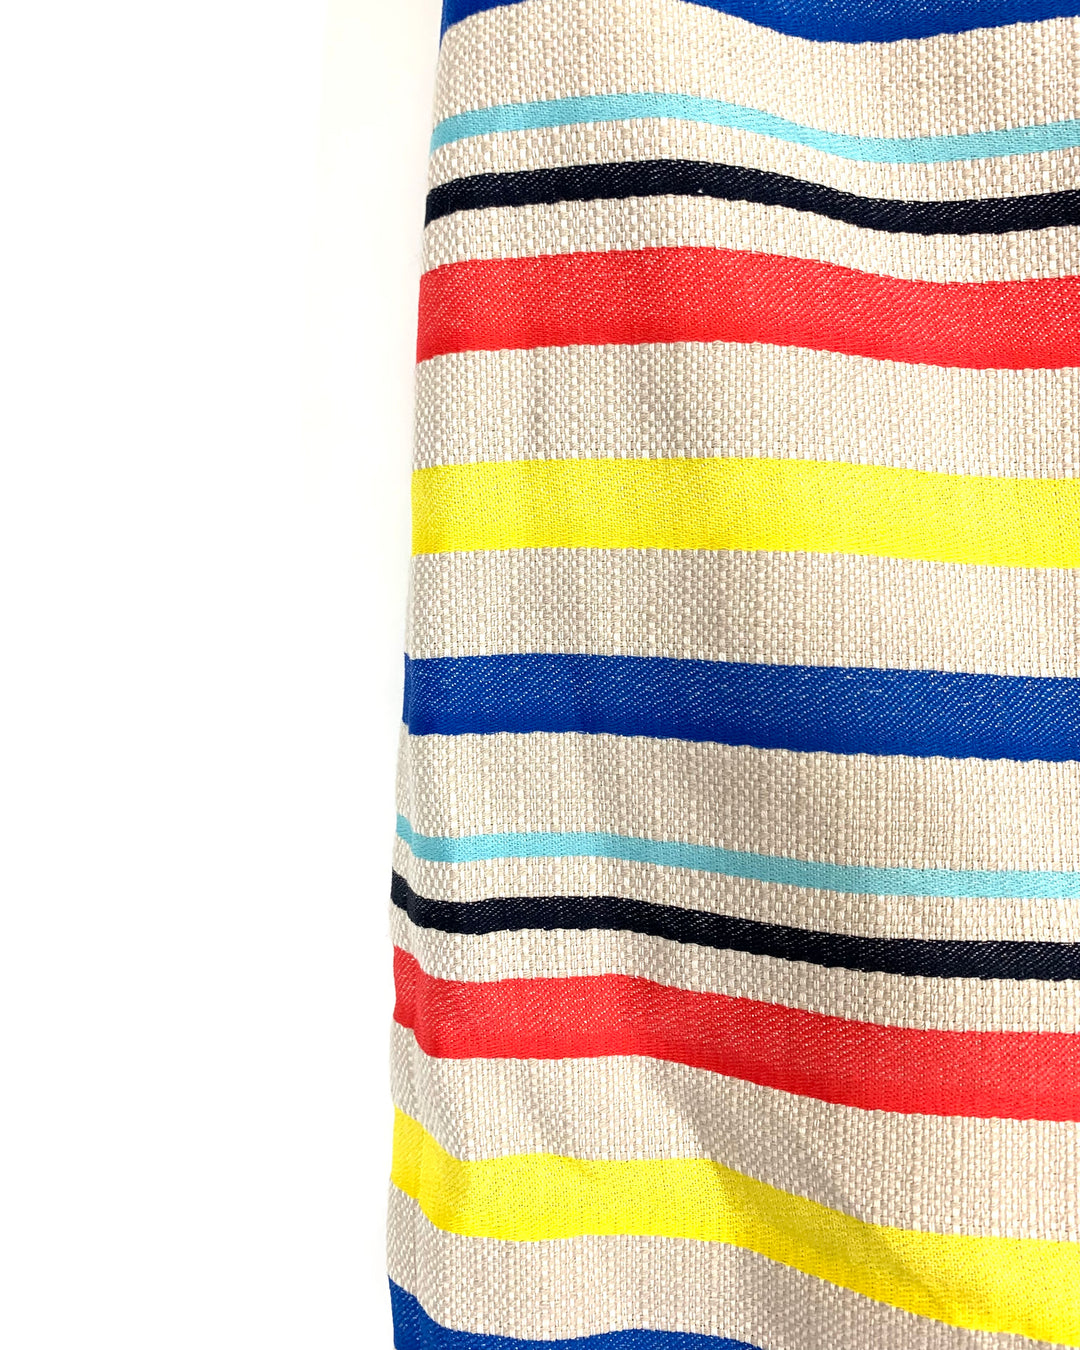 Khaki Striped Midi Pencil Skirt - Size 4